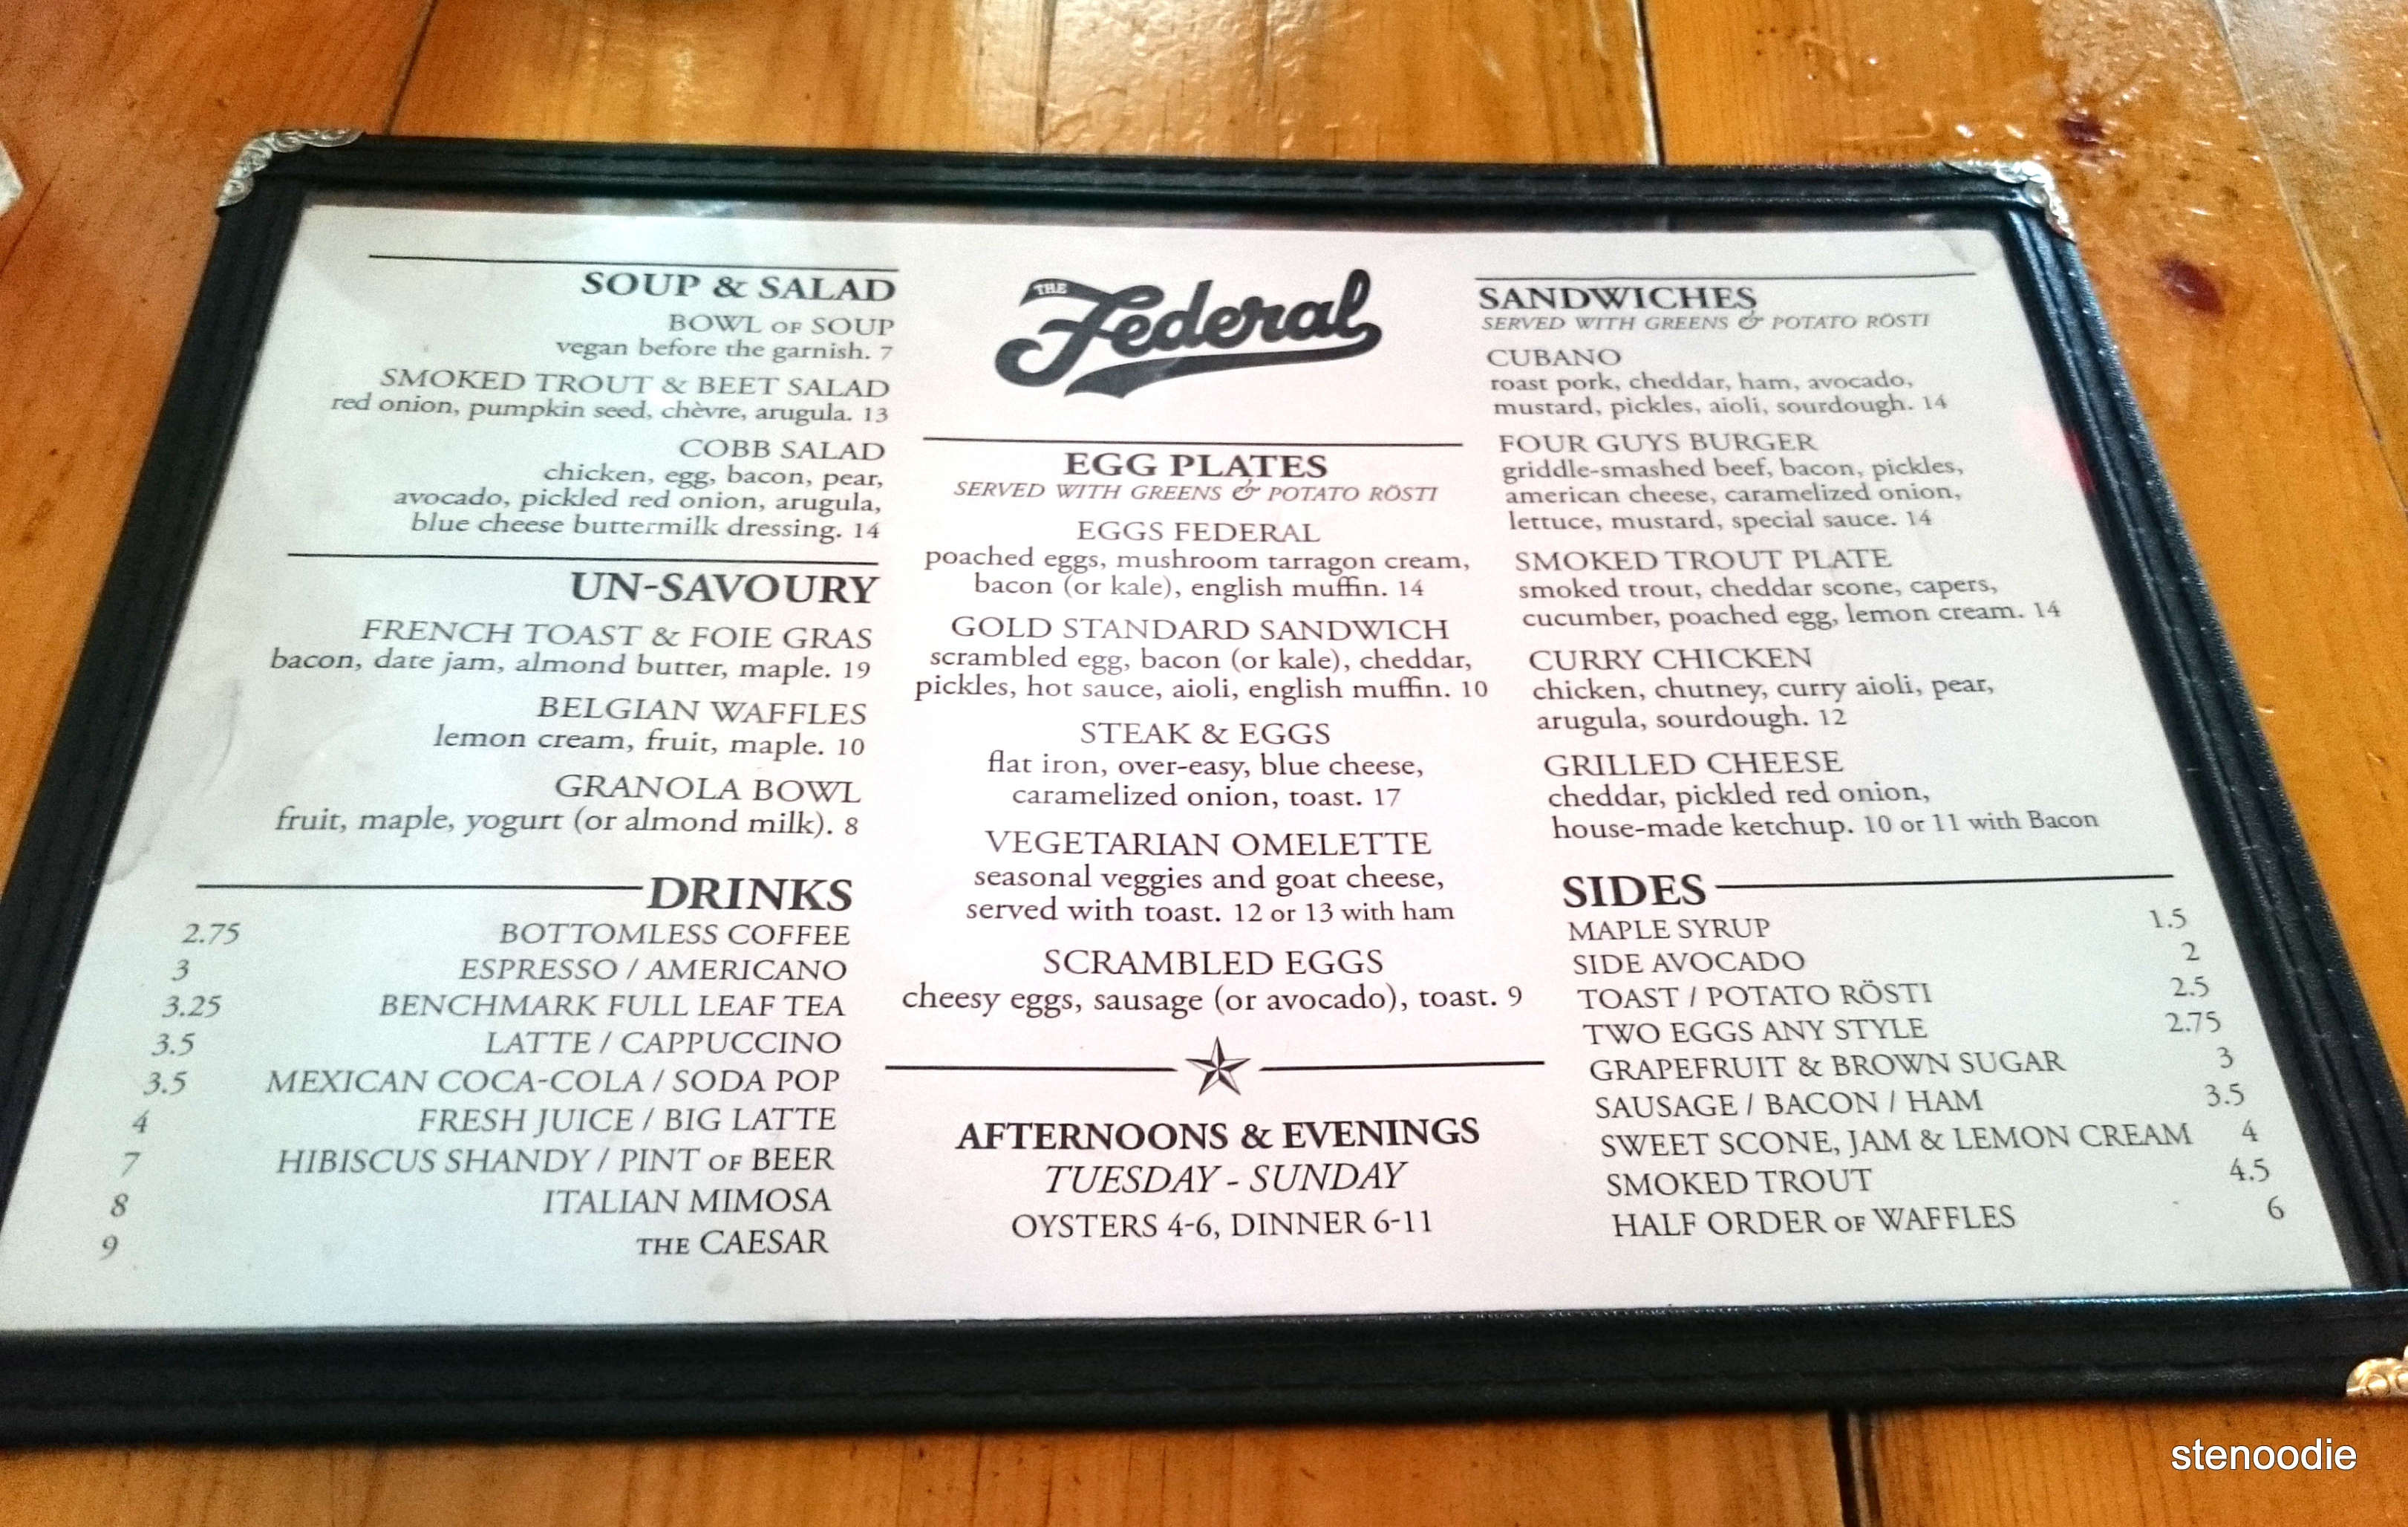  The Federal menu